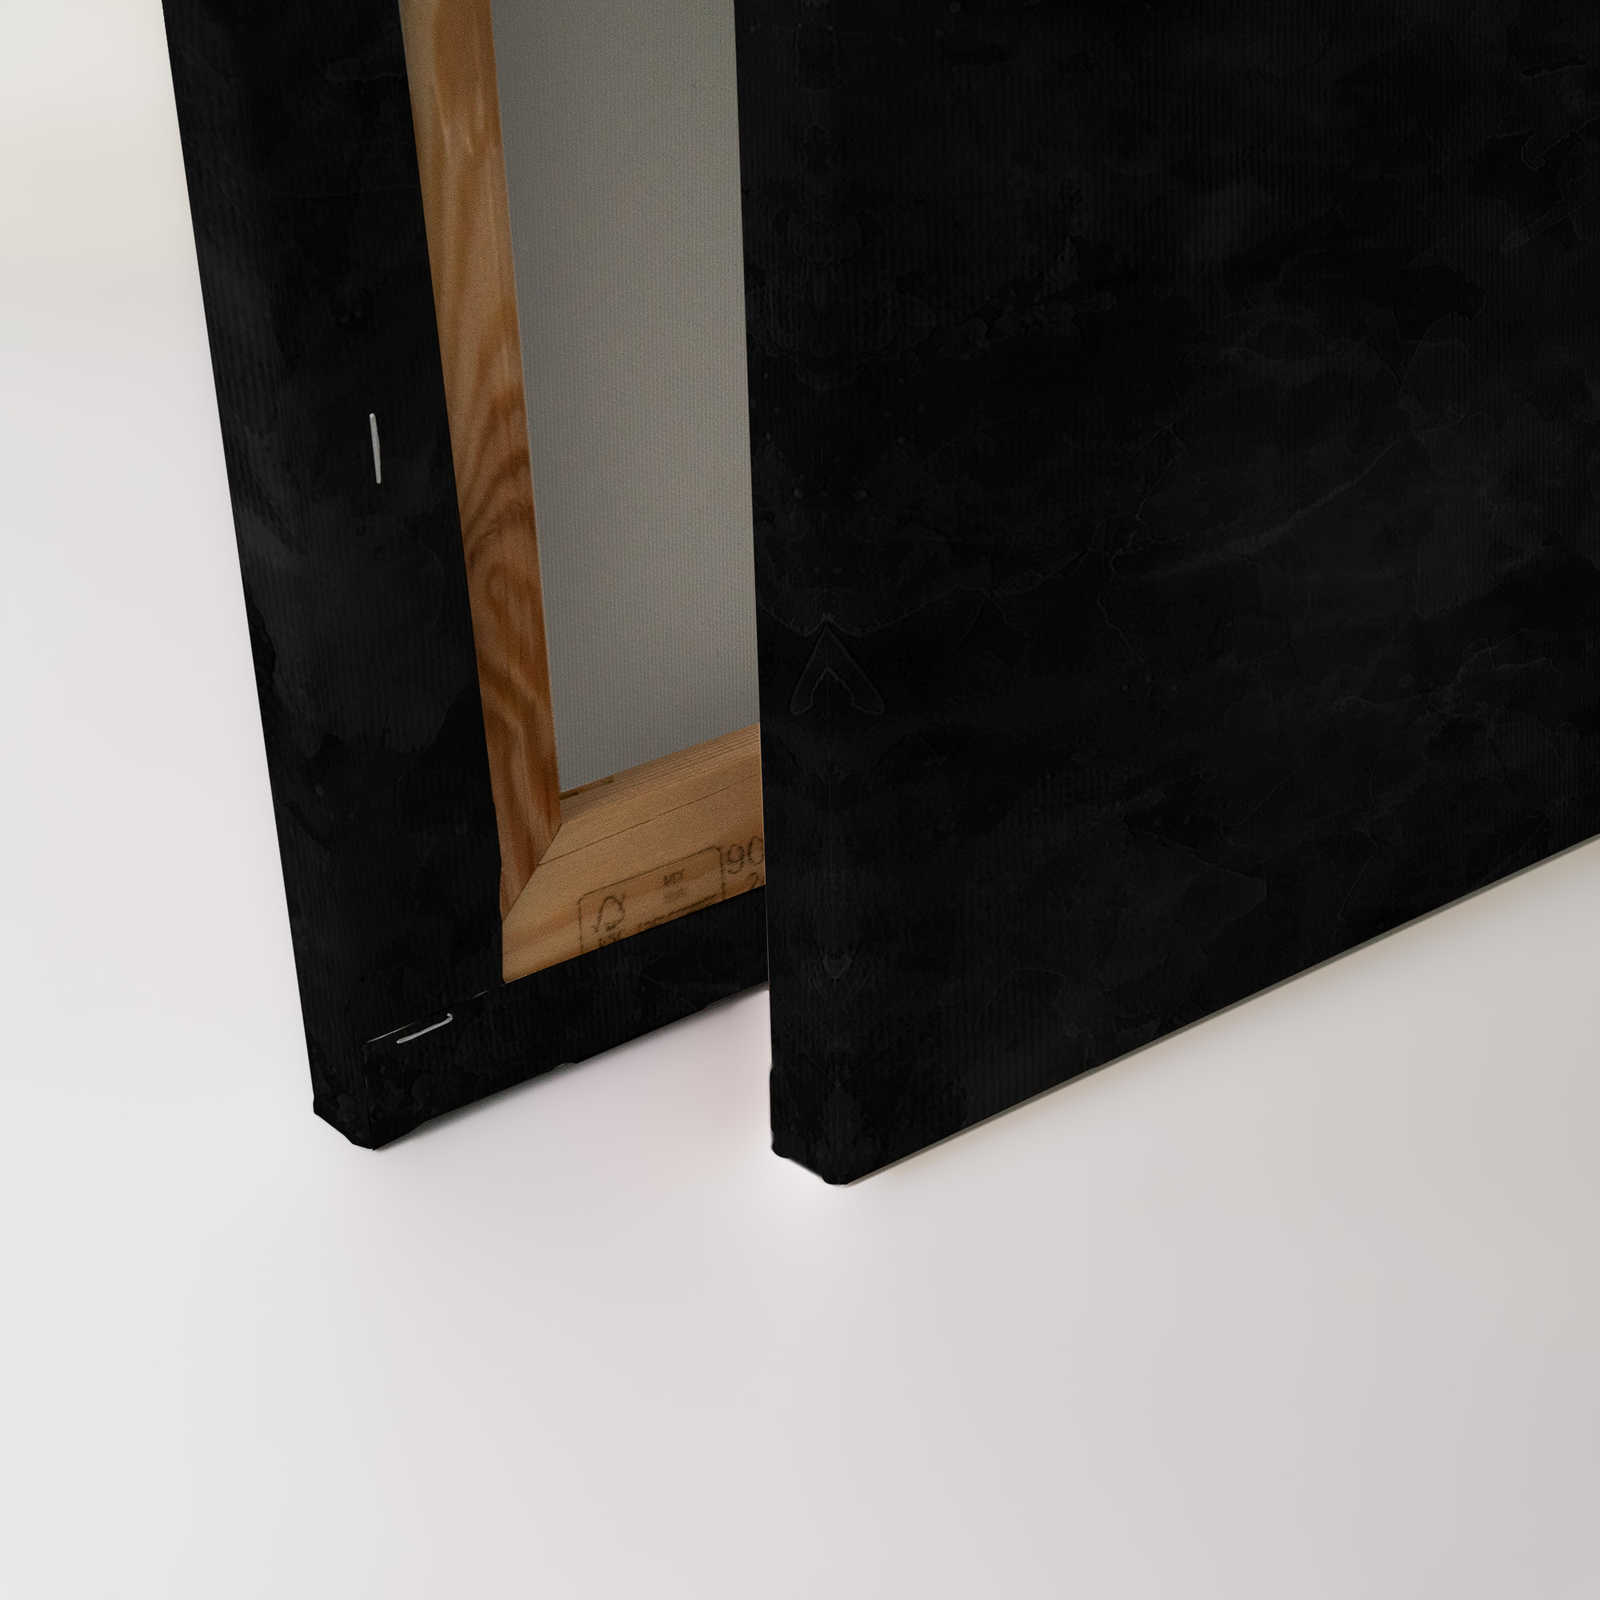             Schwarz-Weißes Leinwandbild Kreidetafel Design – 0,90 m x 0,60 m
        